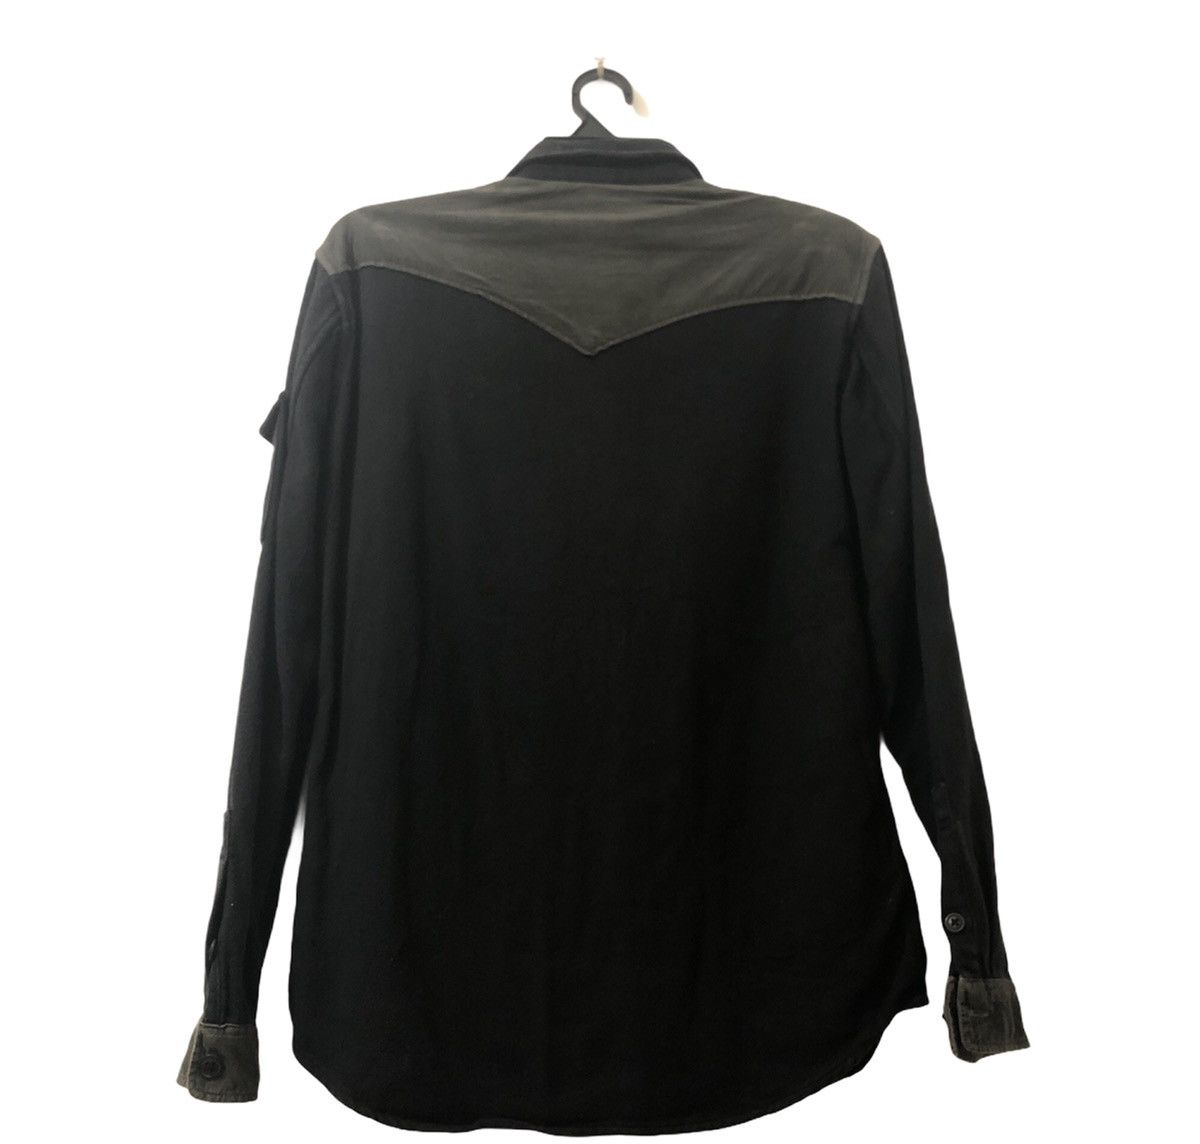 Uniqlo undercover shirt long sleeve - 4